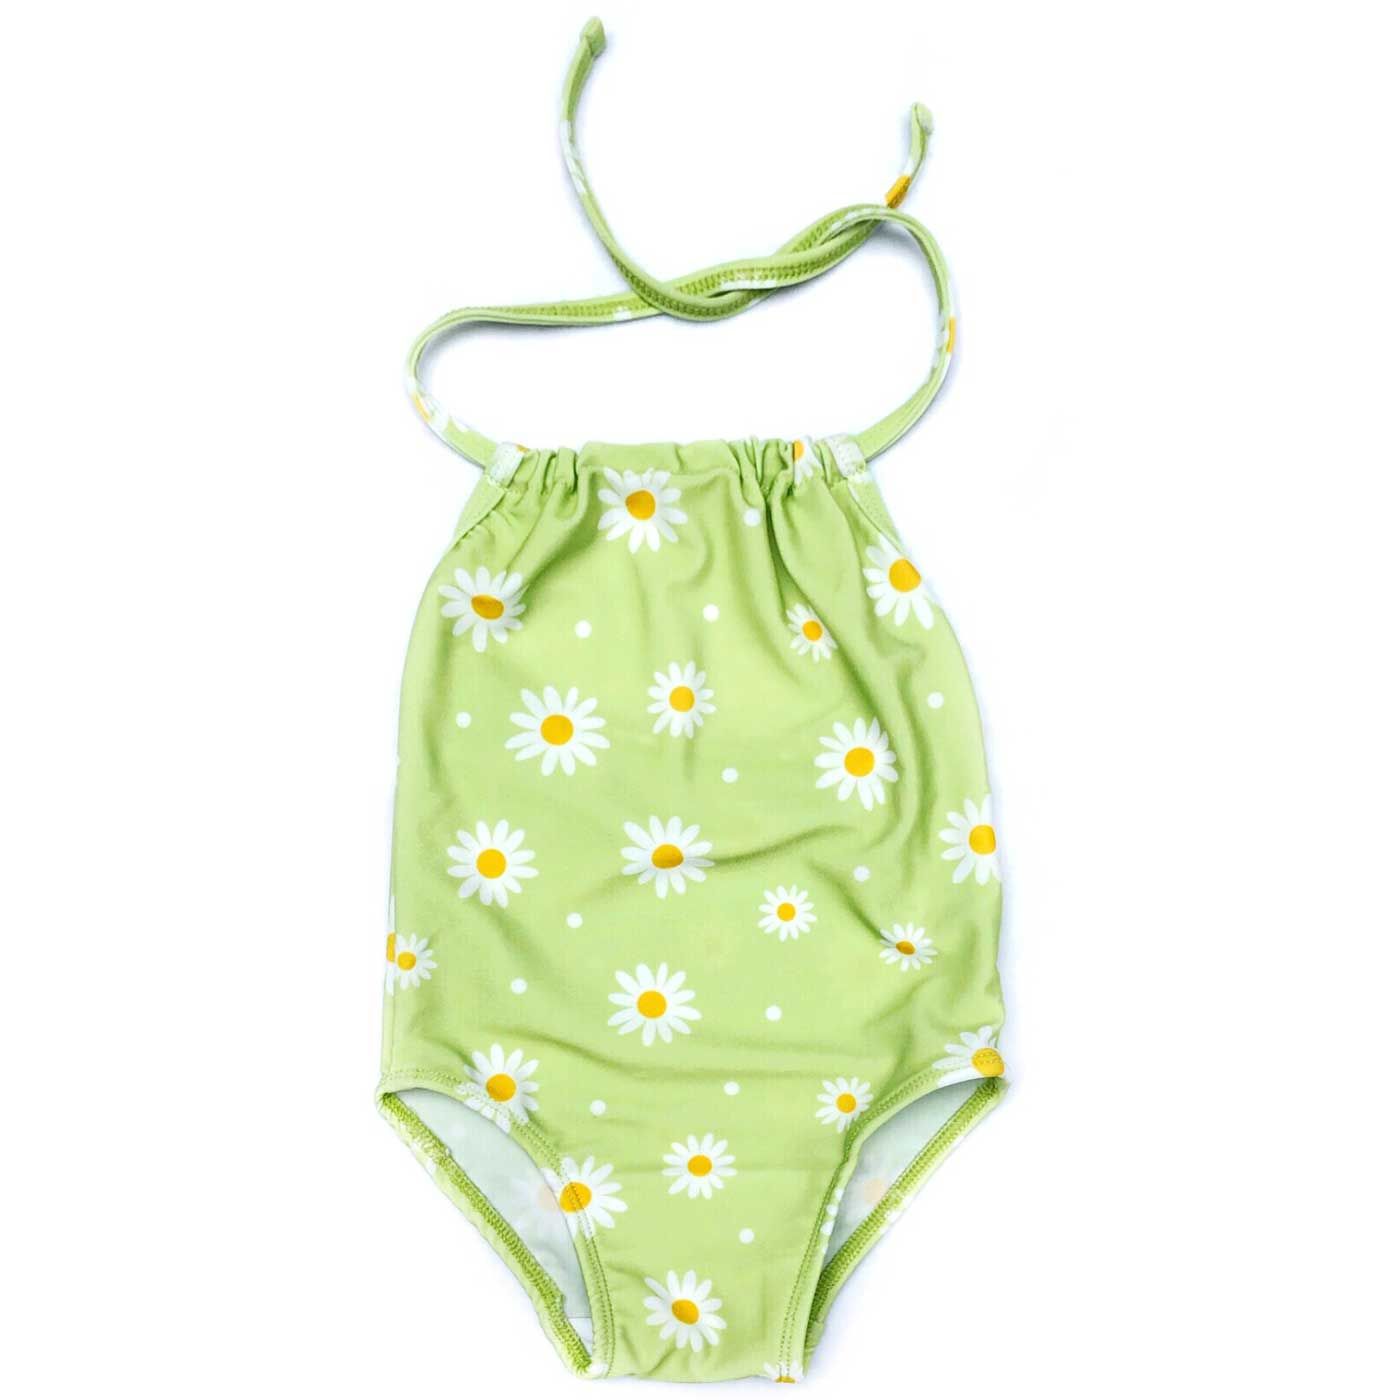 Little Whimsea Daisy Swimsuit in Lime - XS - 1